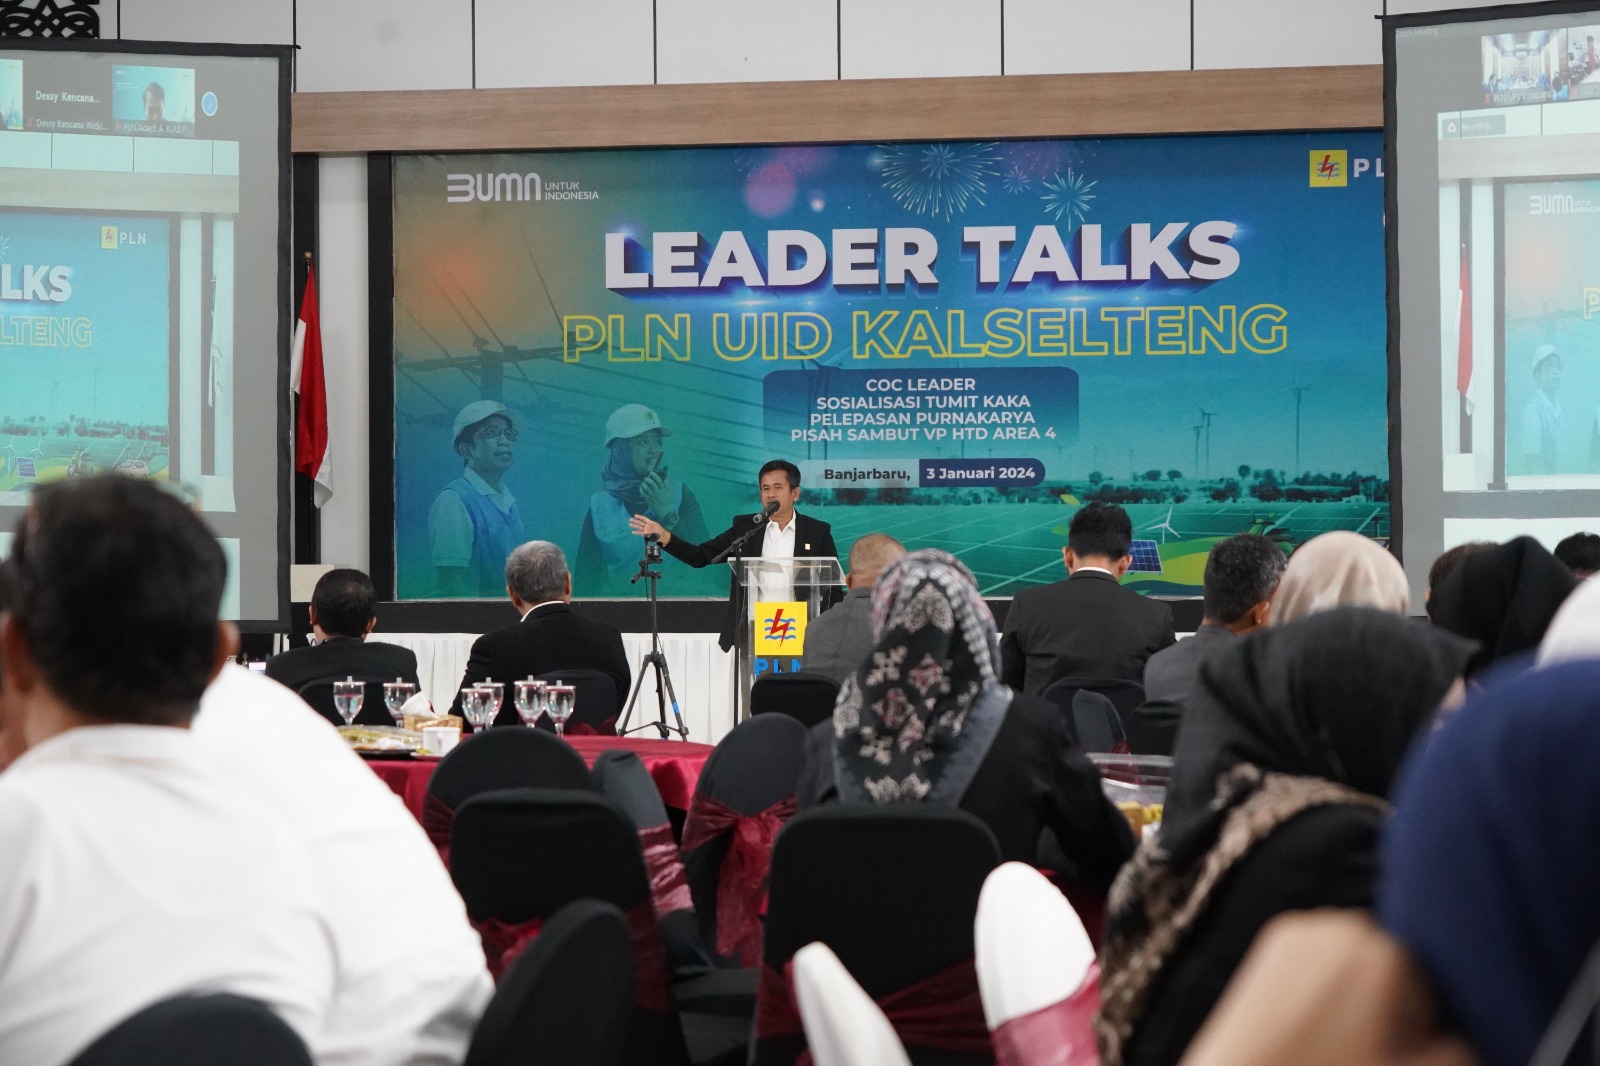 General Manager PLN UID Kalselteng Muhammad Joharifin saat memberikan pengarahan saat kegiatan Leader Talks PLN UID Kalselteng di Banjarbaru